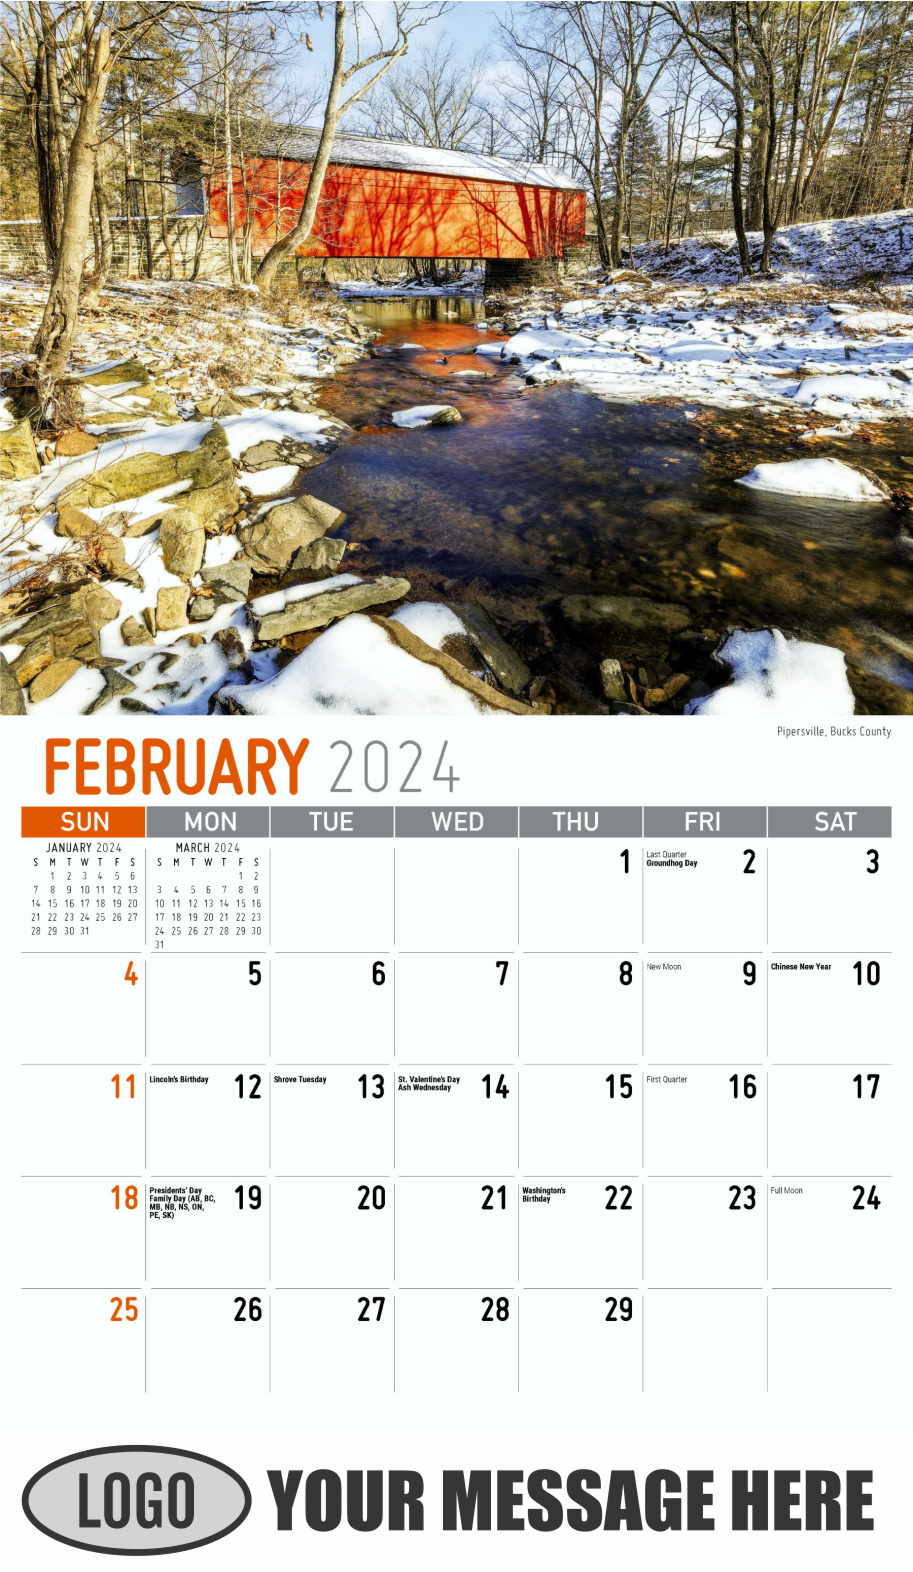 Scenes of Pennsylvania 2024 Business Promotion Calendar - February